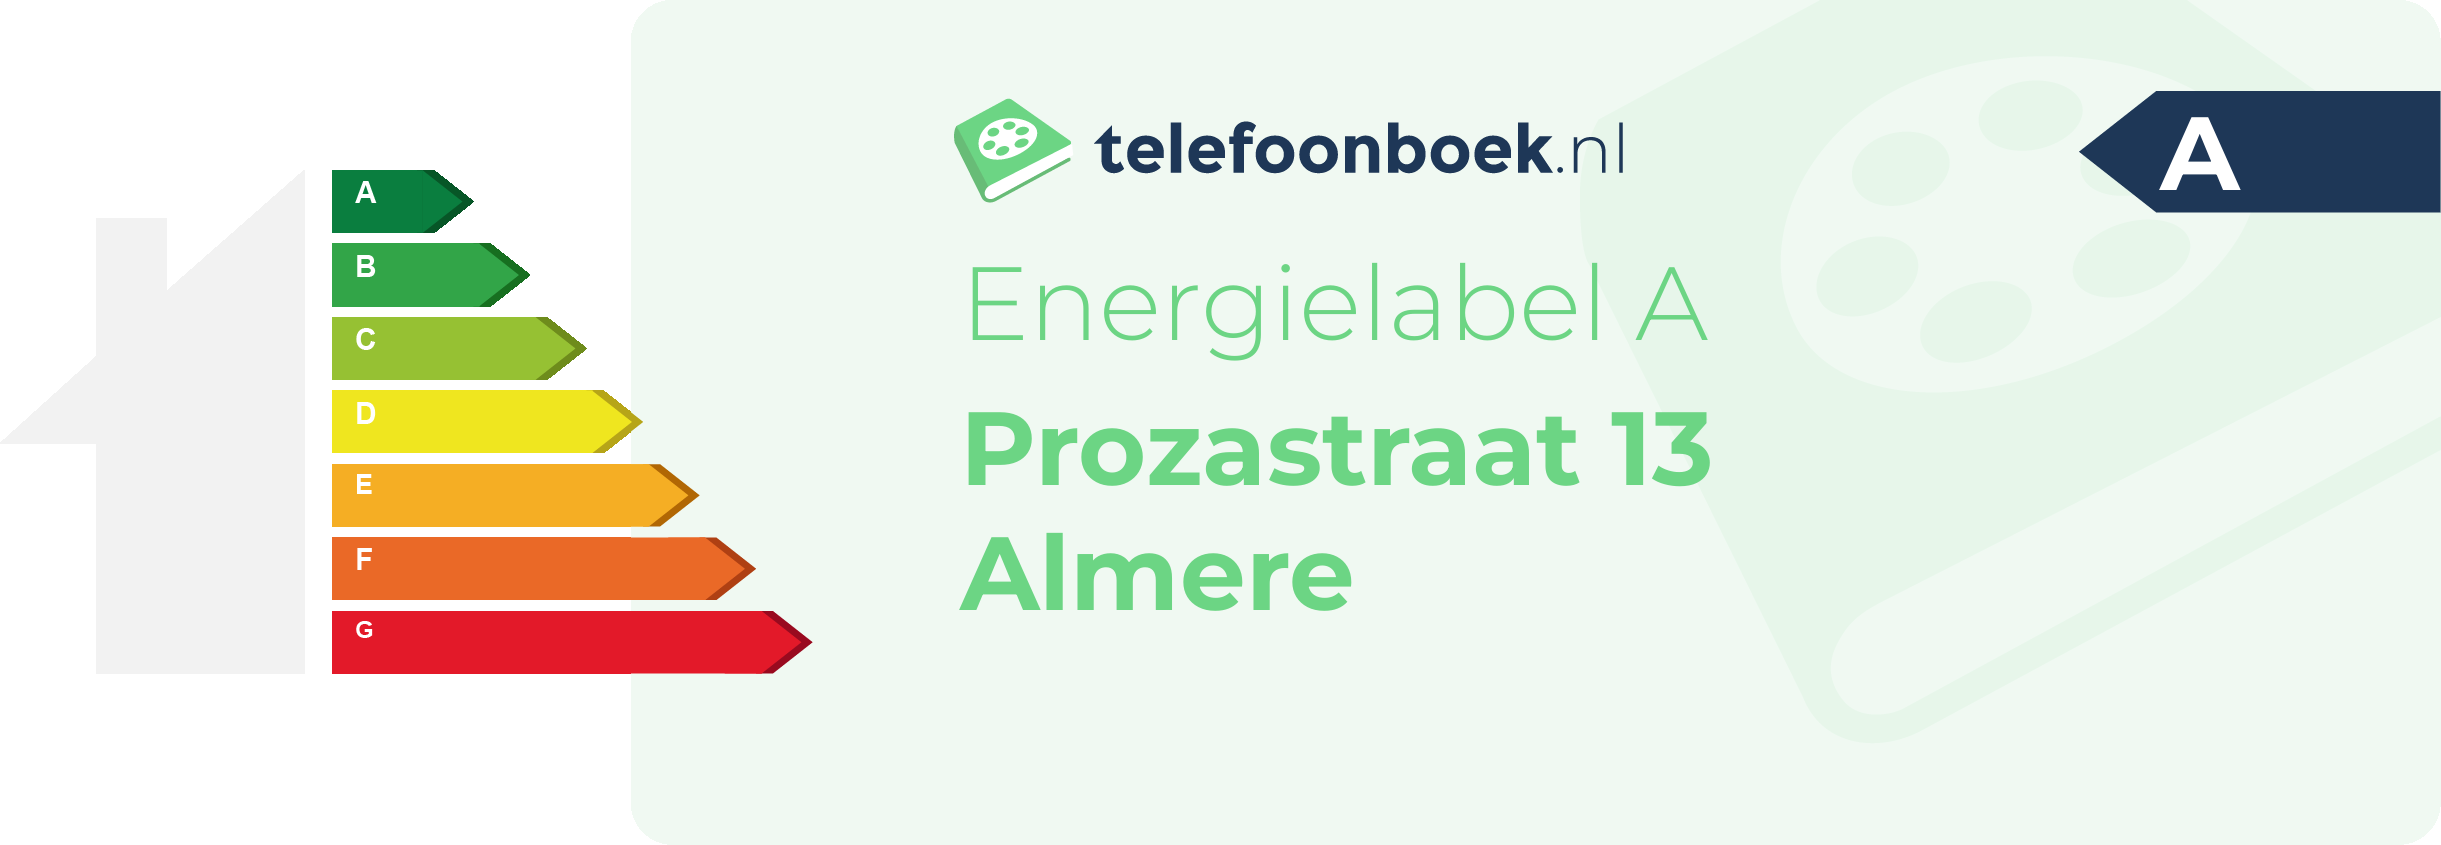 Energielabel Prozastraat 13 Almere